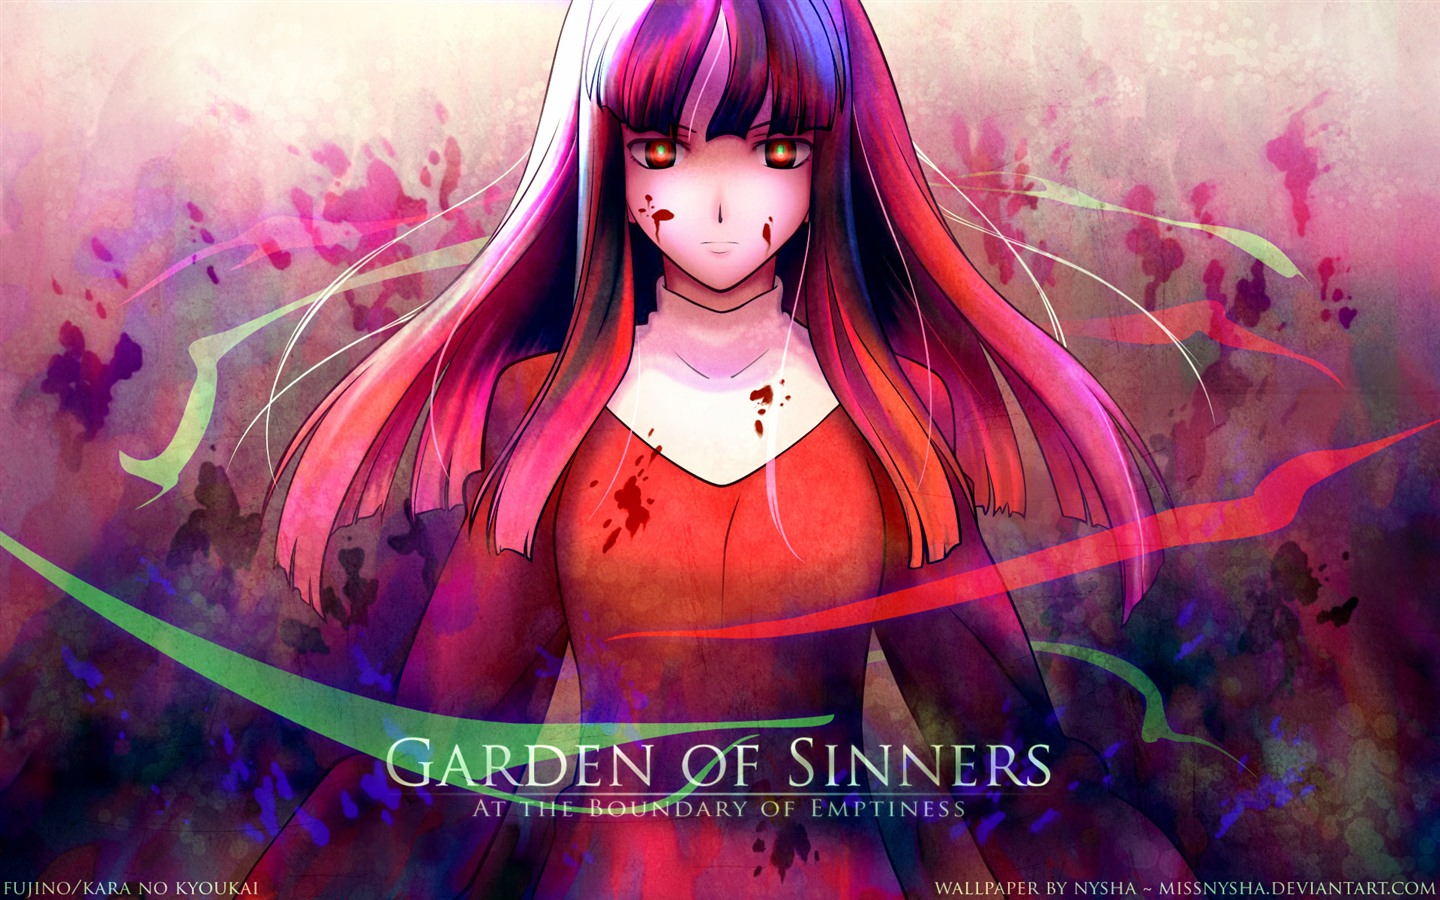 the Garden of sinners HD wallpapers #1 - 1440x900